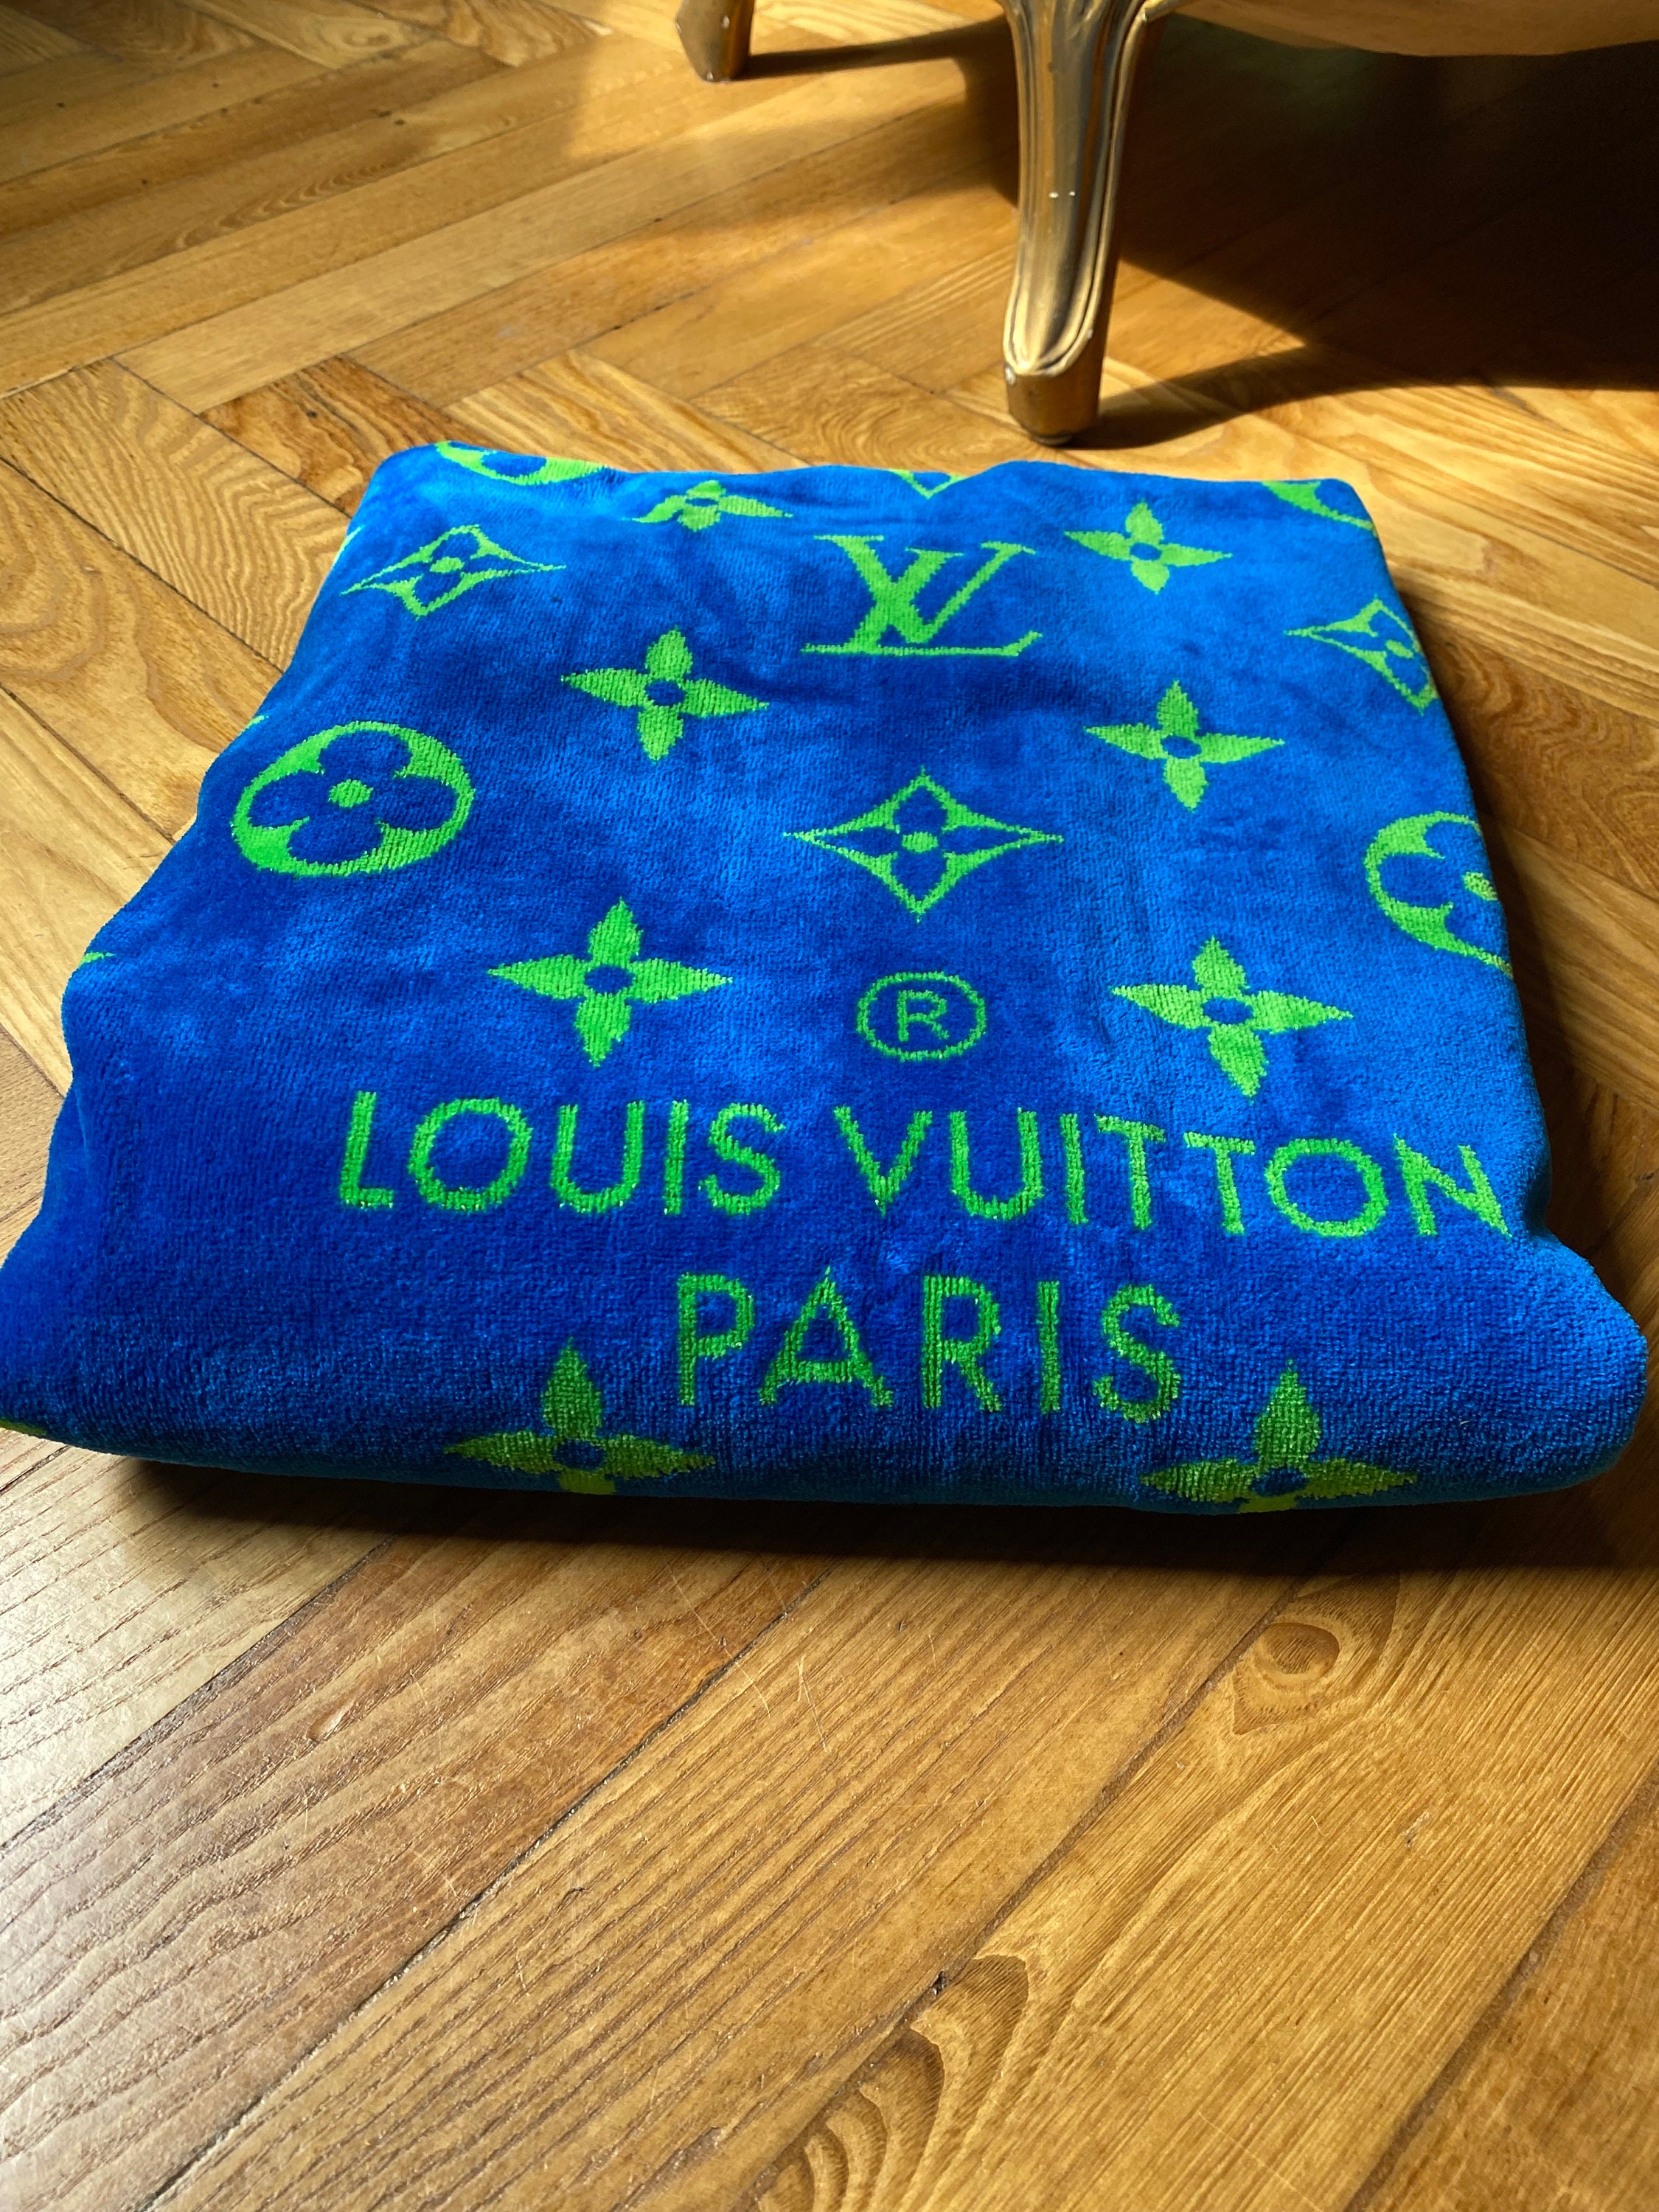 Louis Vuitton Grey Monogram Comforter Bedding Set - REVER LAVIE